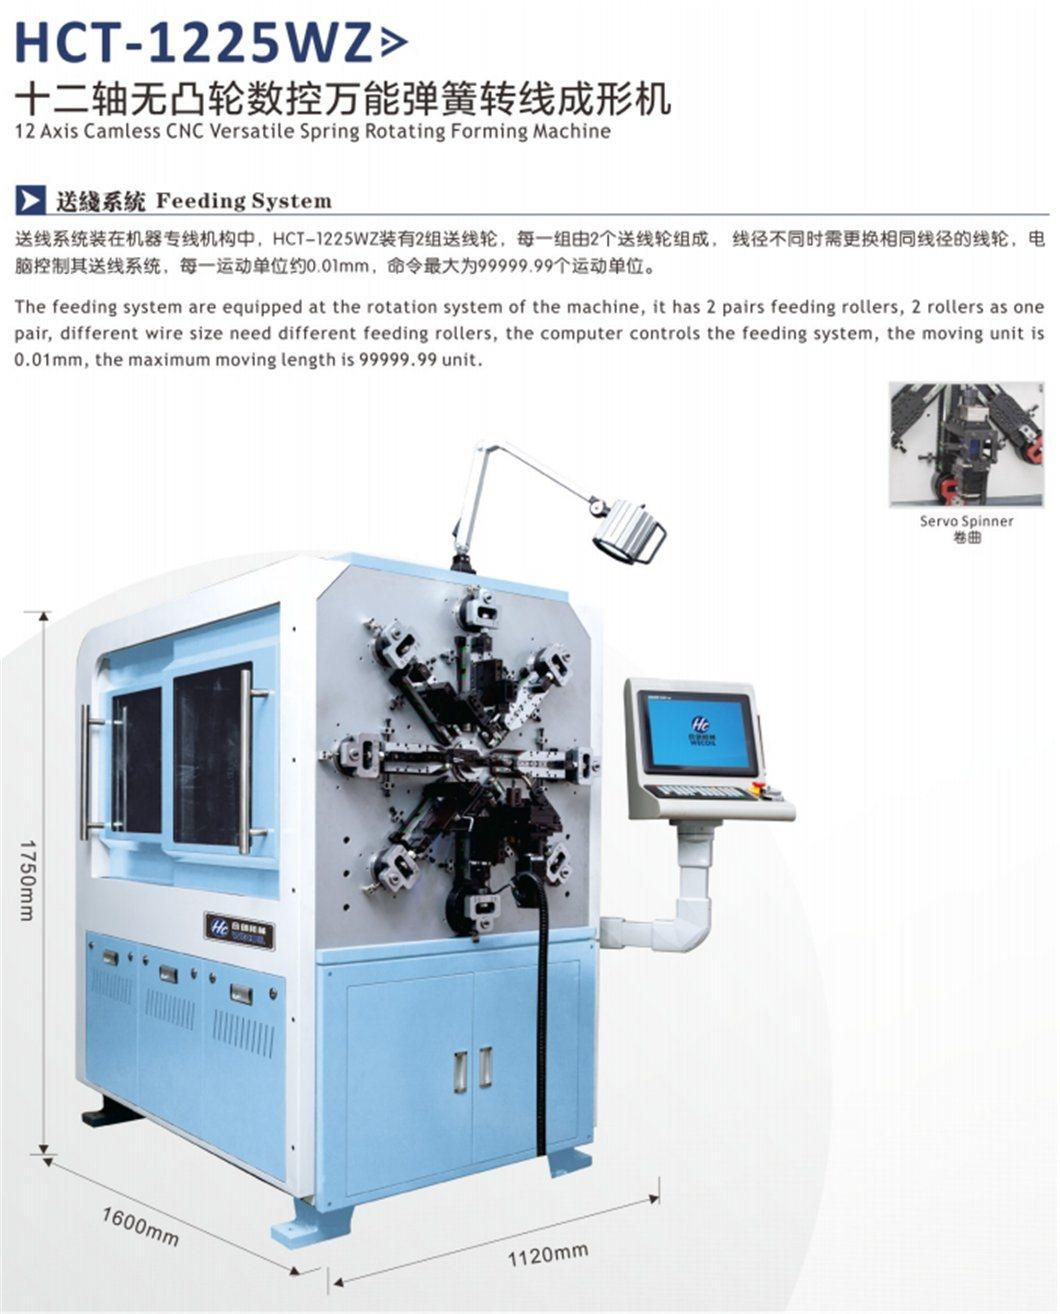 HCT-1225WZ Double torsion spring making machine